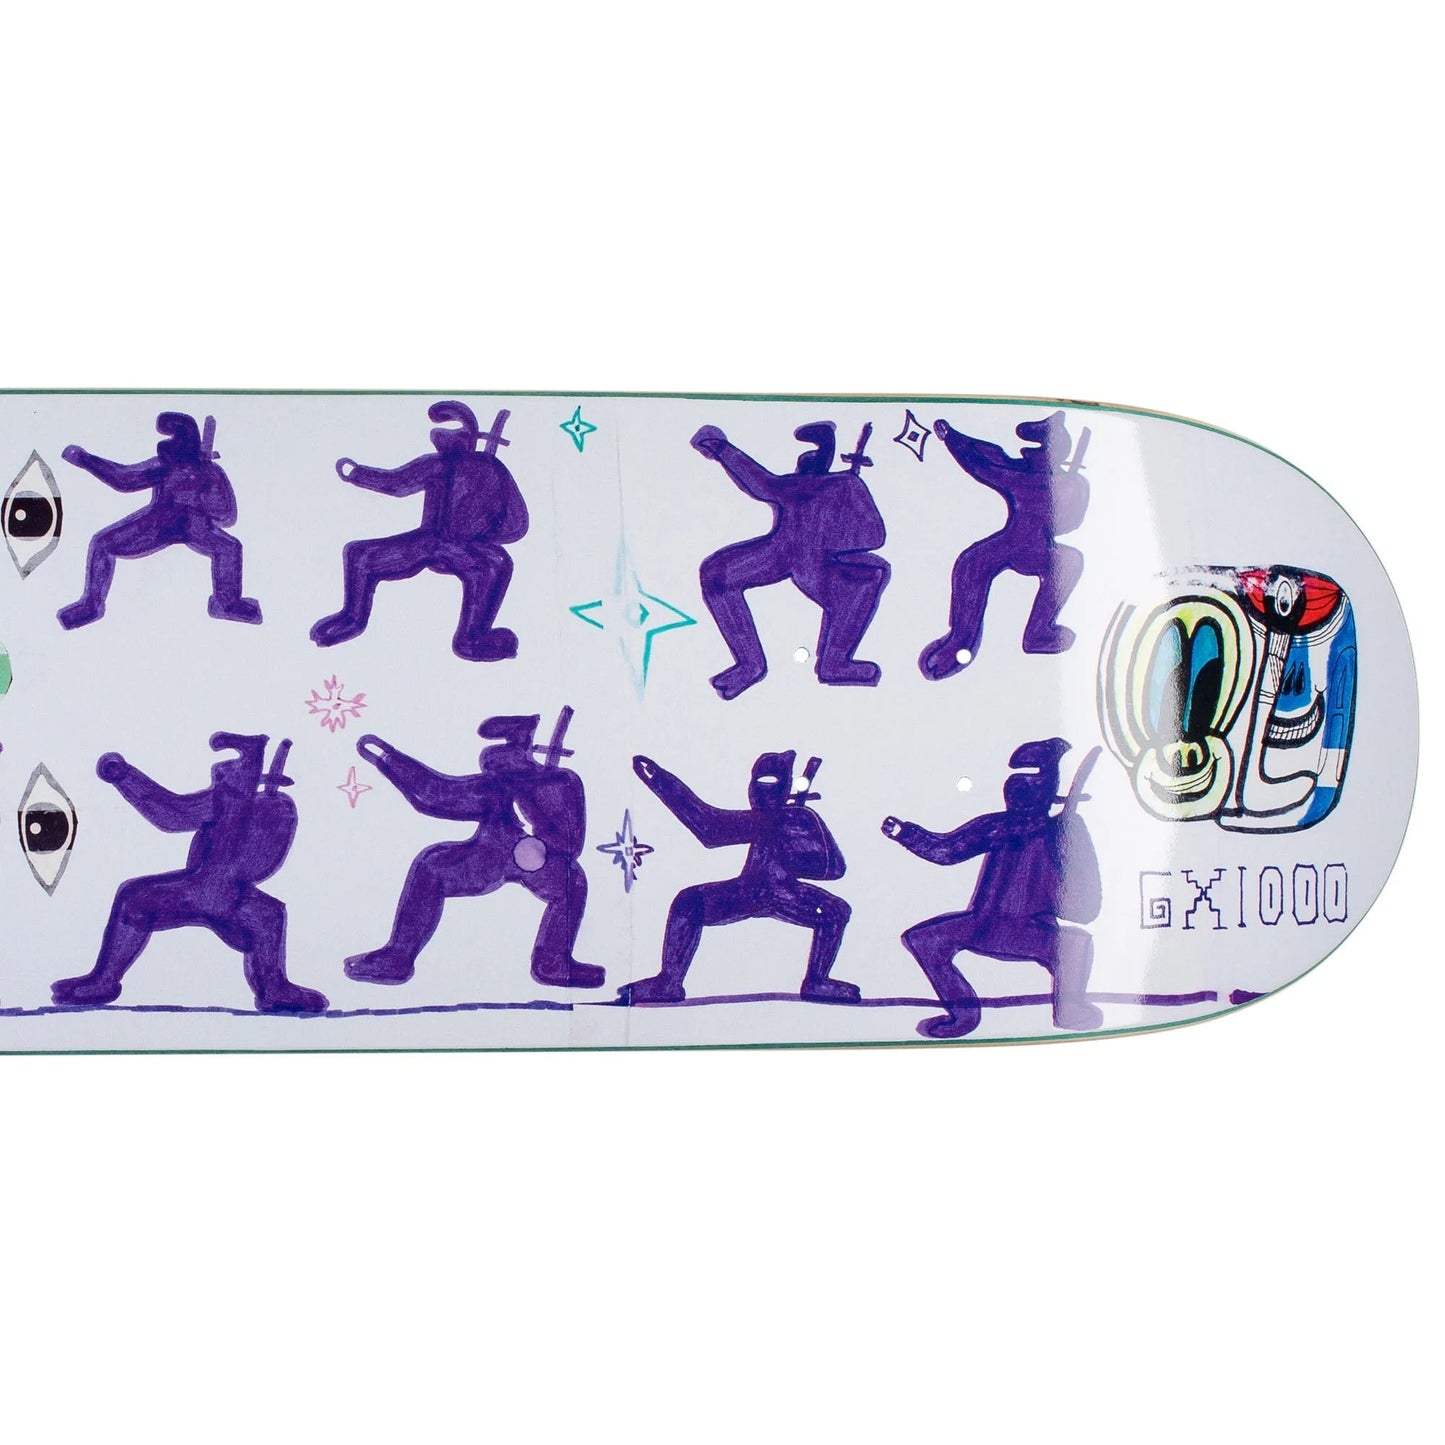 GX1000 Ninjas "Greene" Deck (8.375”) - Tiki Room Skateboards - 3